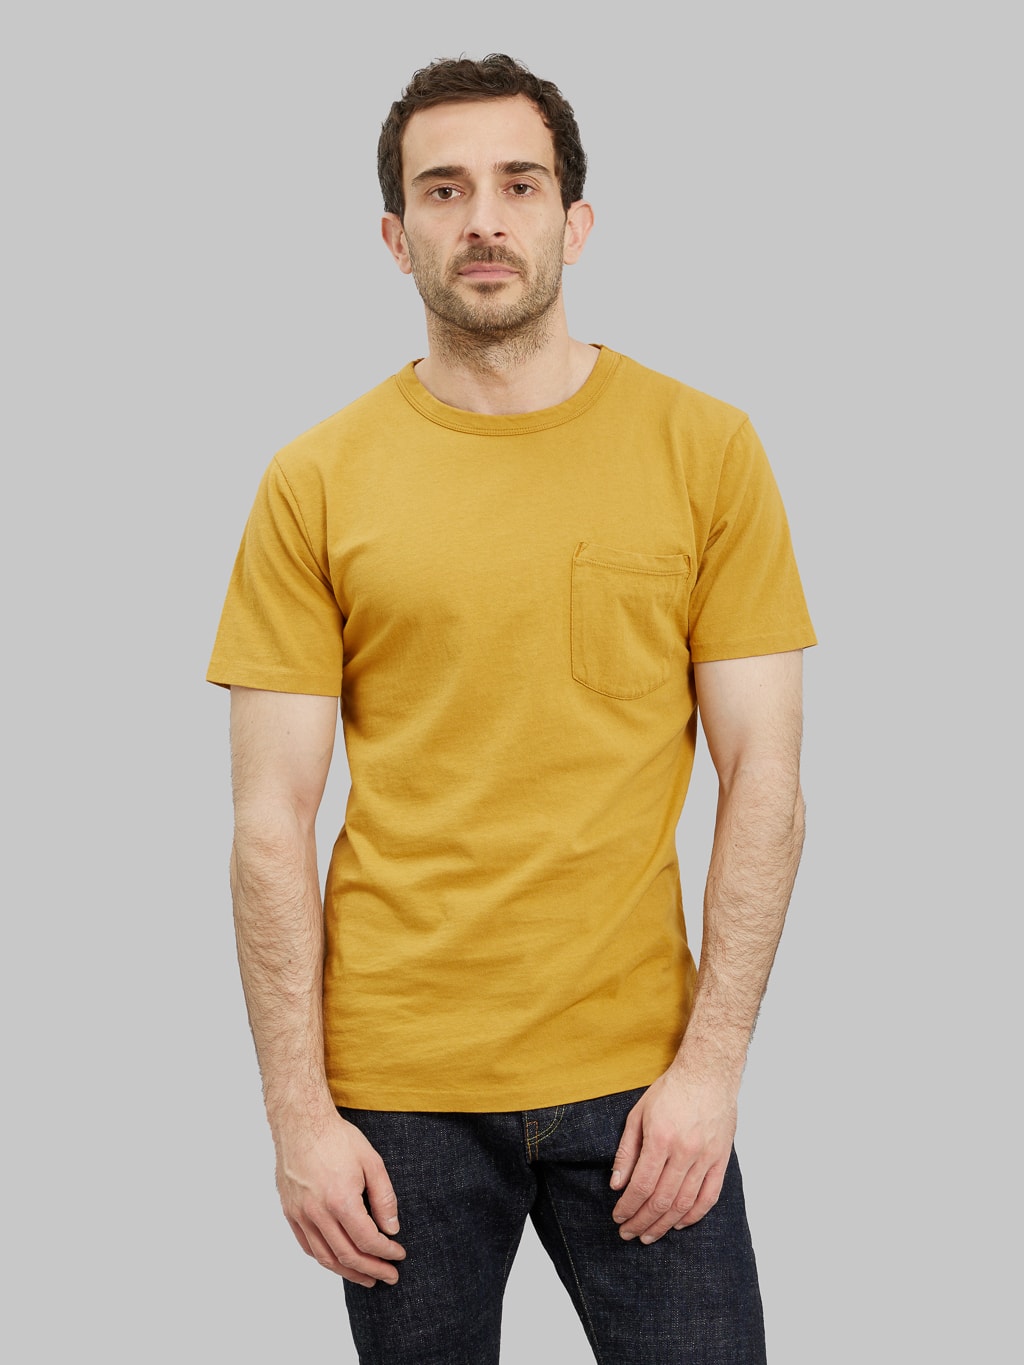 freenote cloth 9 ounce pocket t shirt mustard heavyweight model look